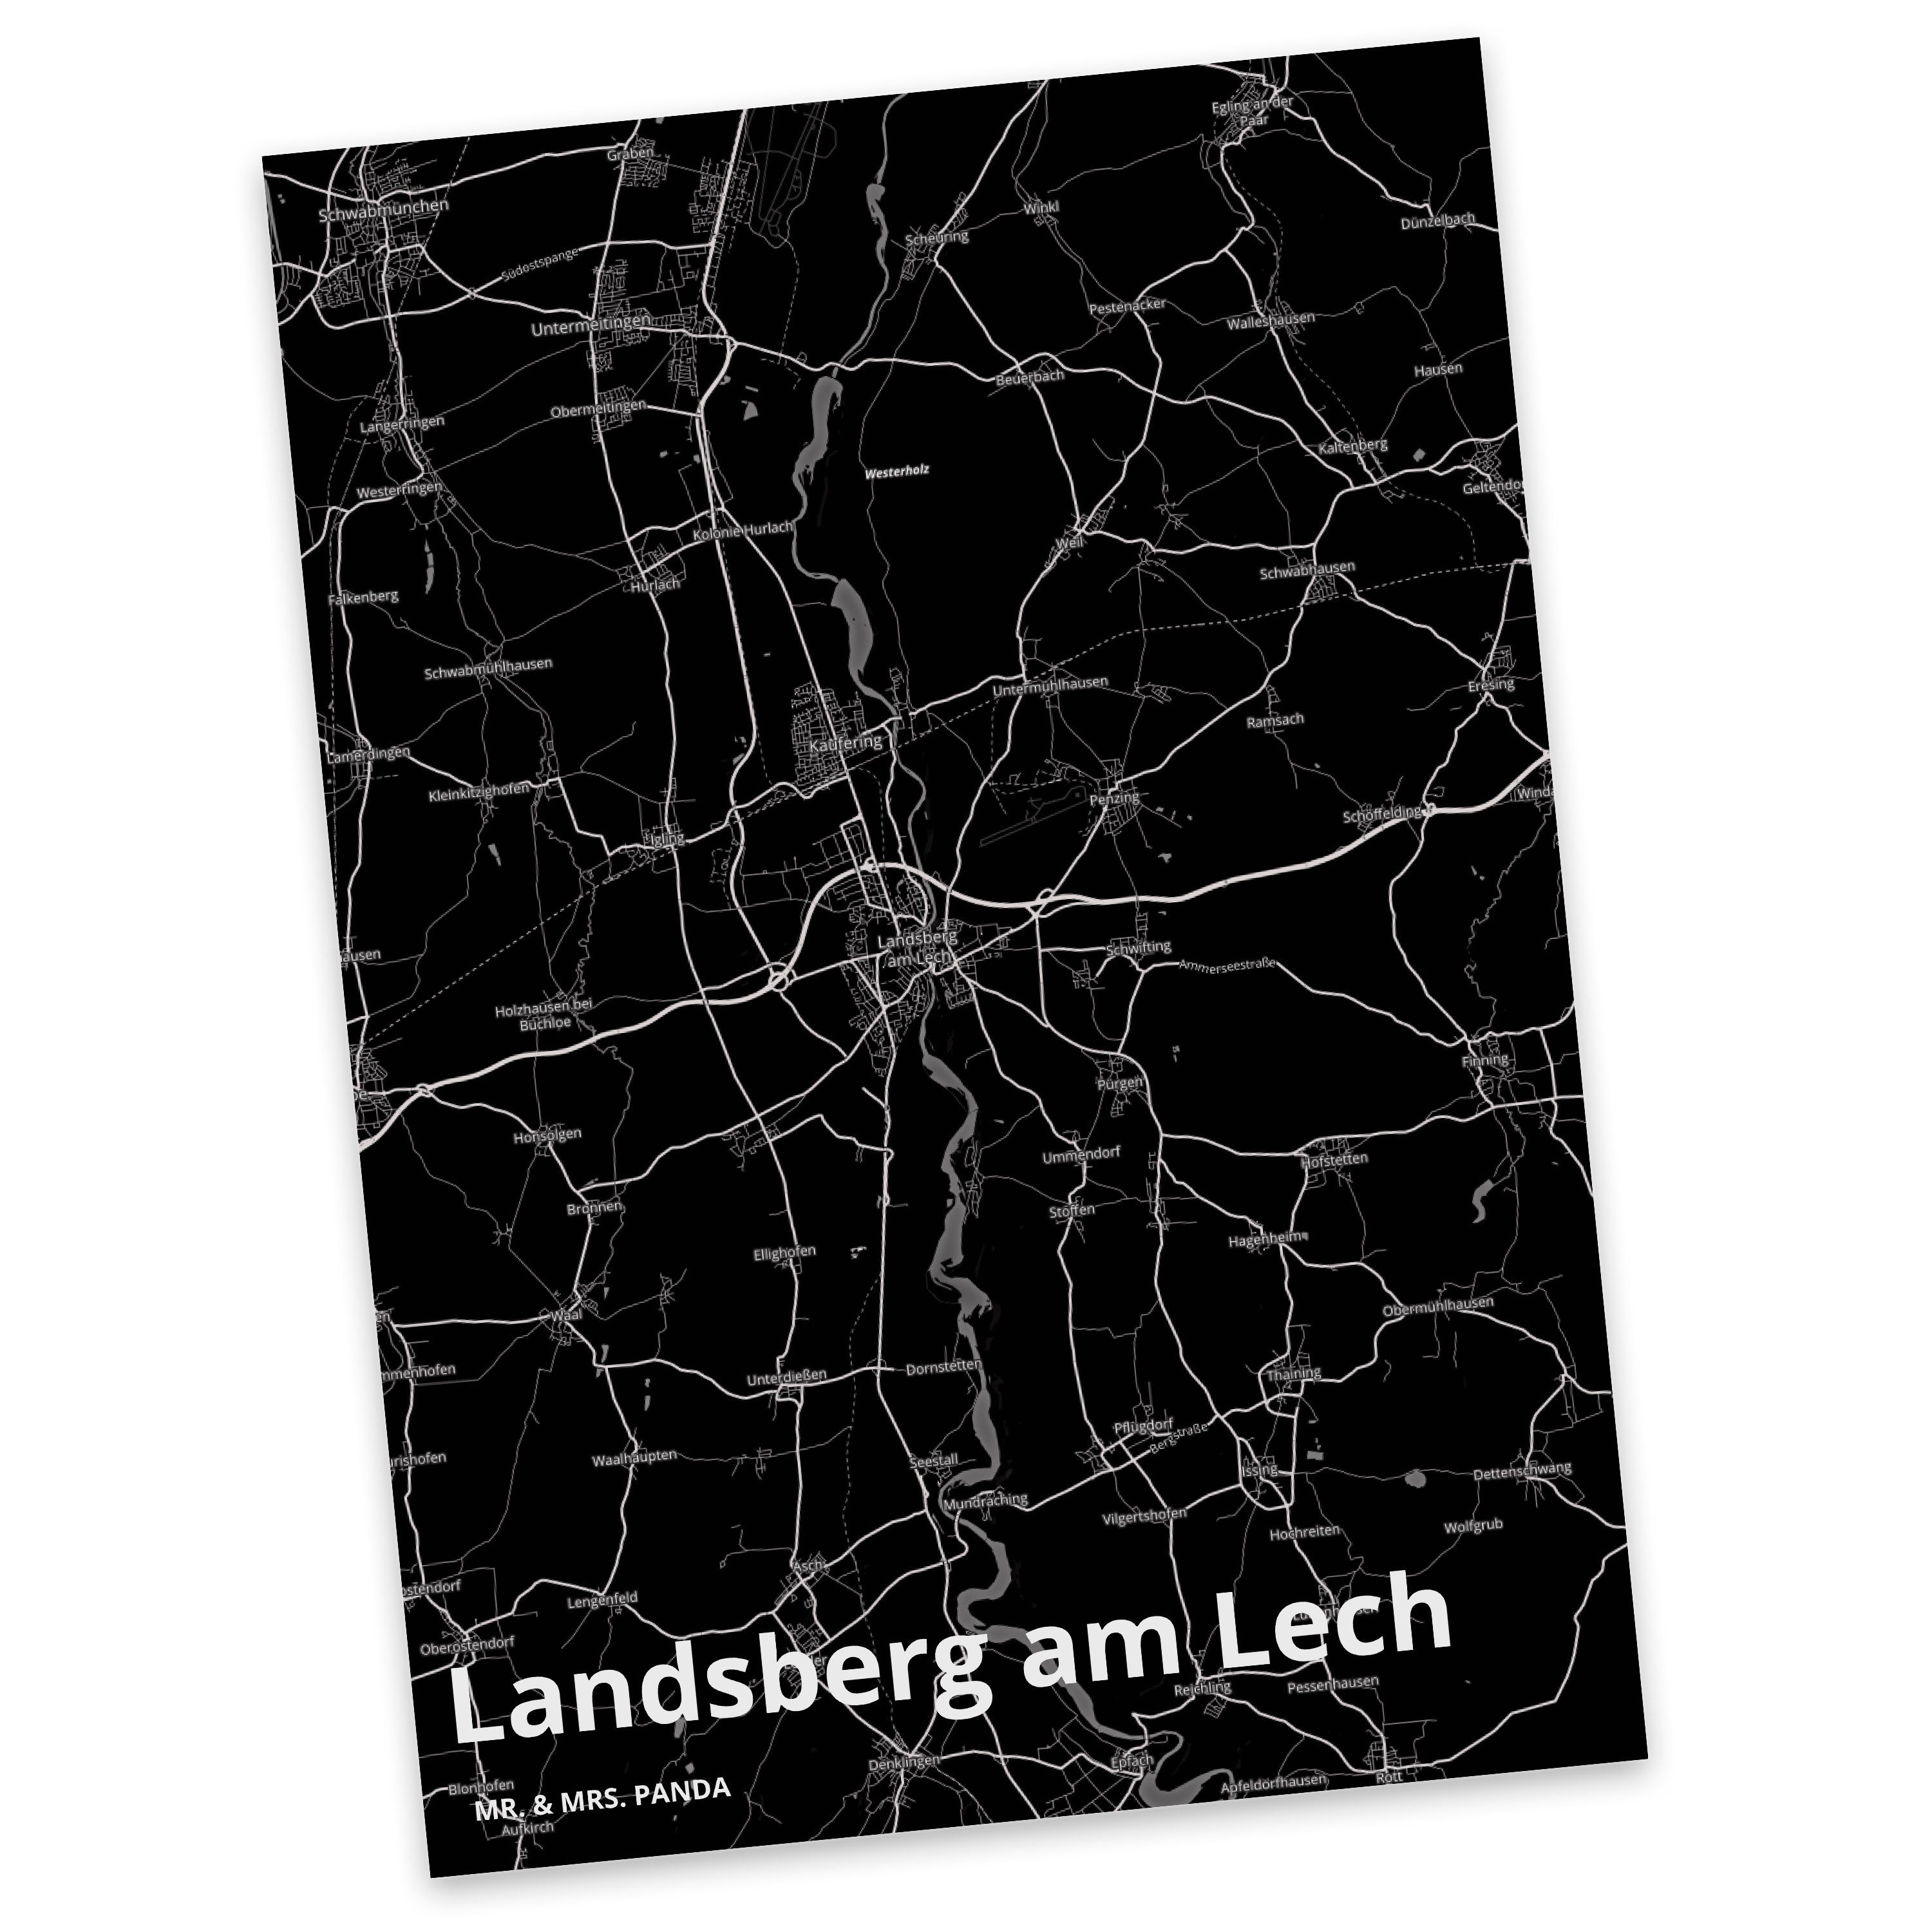 Mr. & Mrs. Panda Postkarte Landsberg am Lech - Geschenk, Ort, Stadt, Dankeskarte, Stadt Dorf Kar